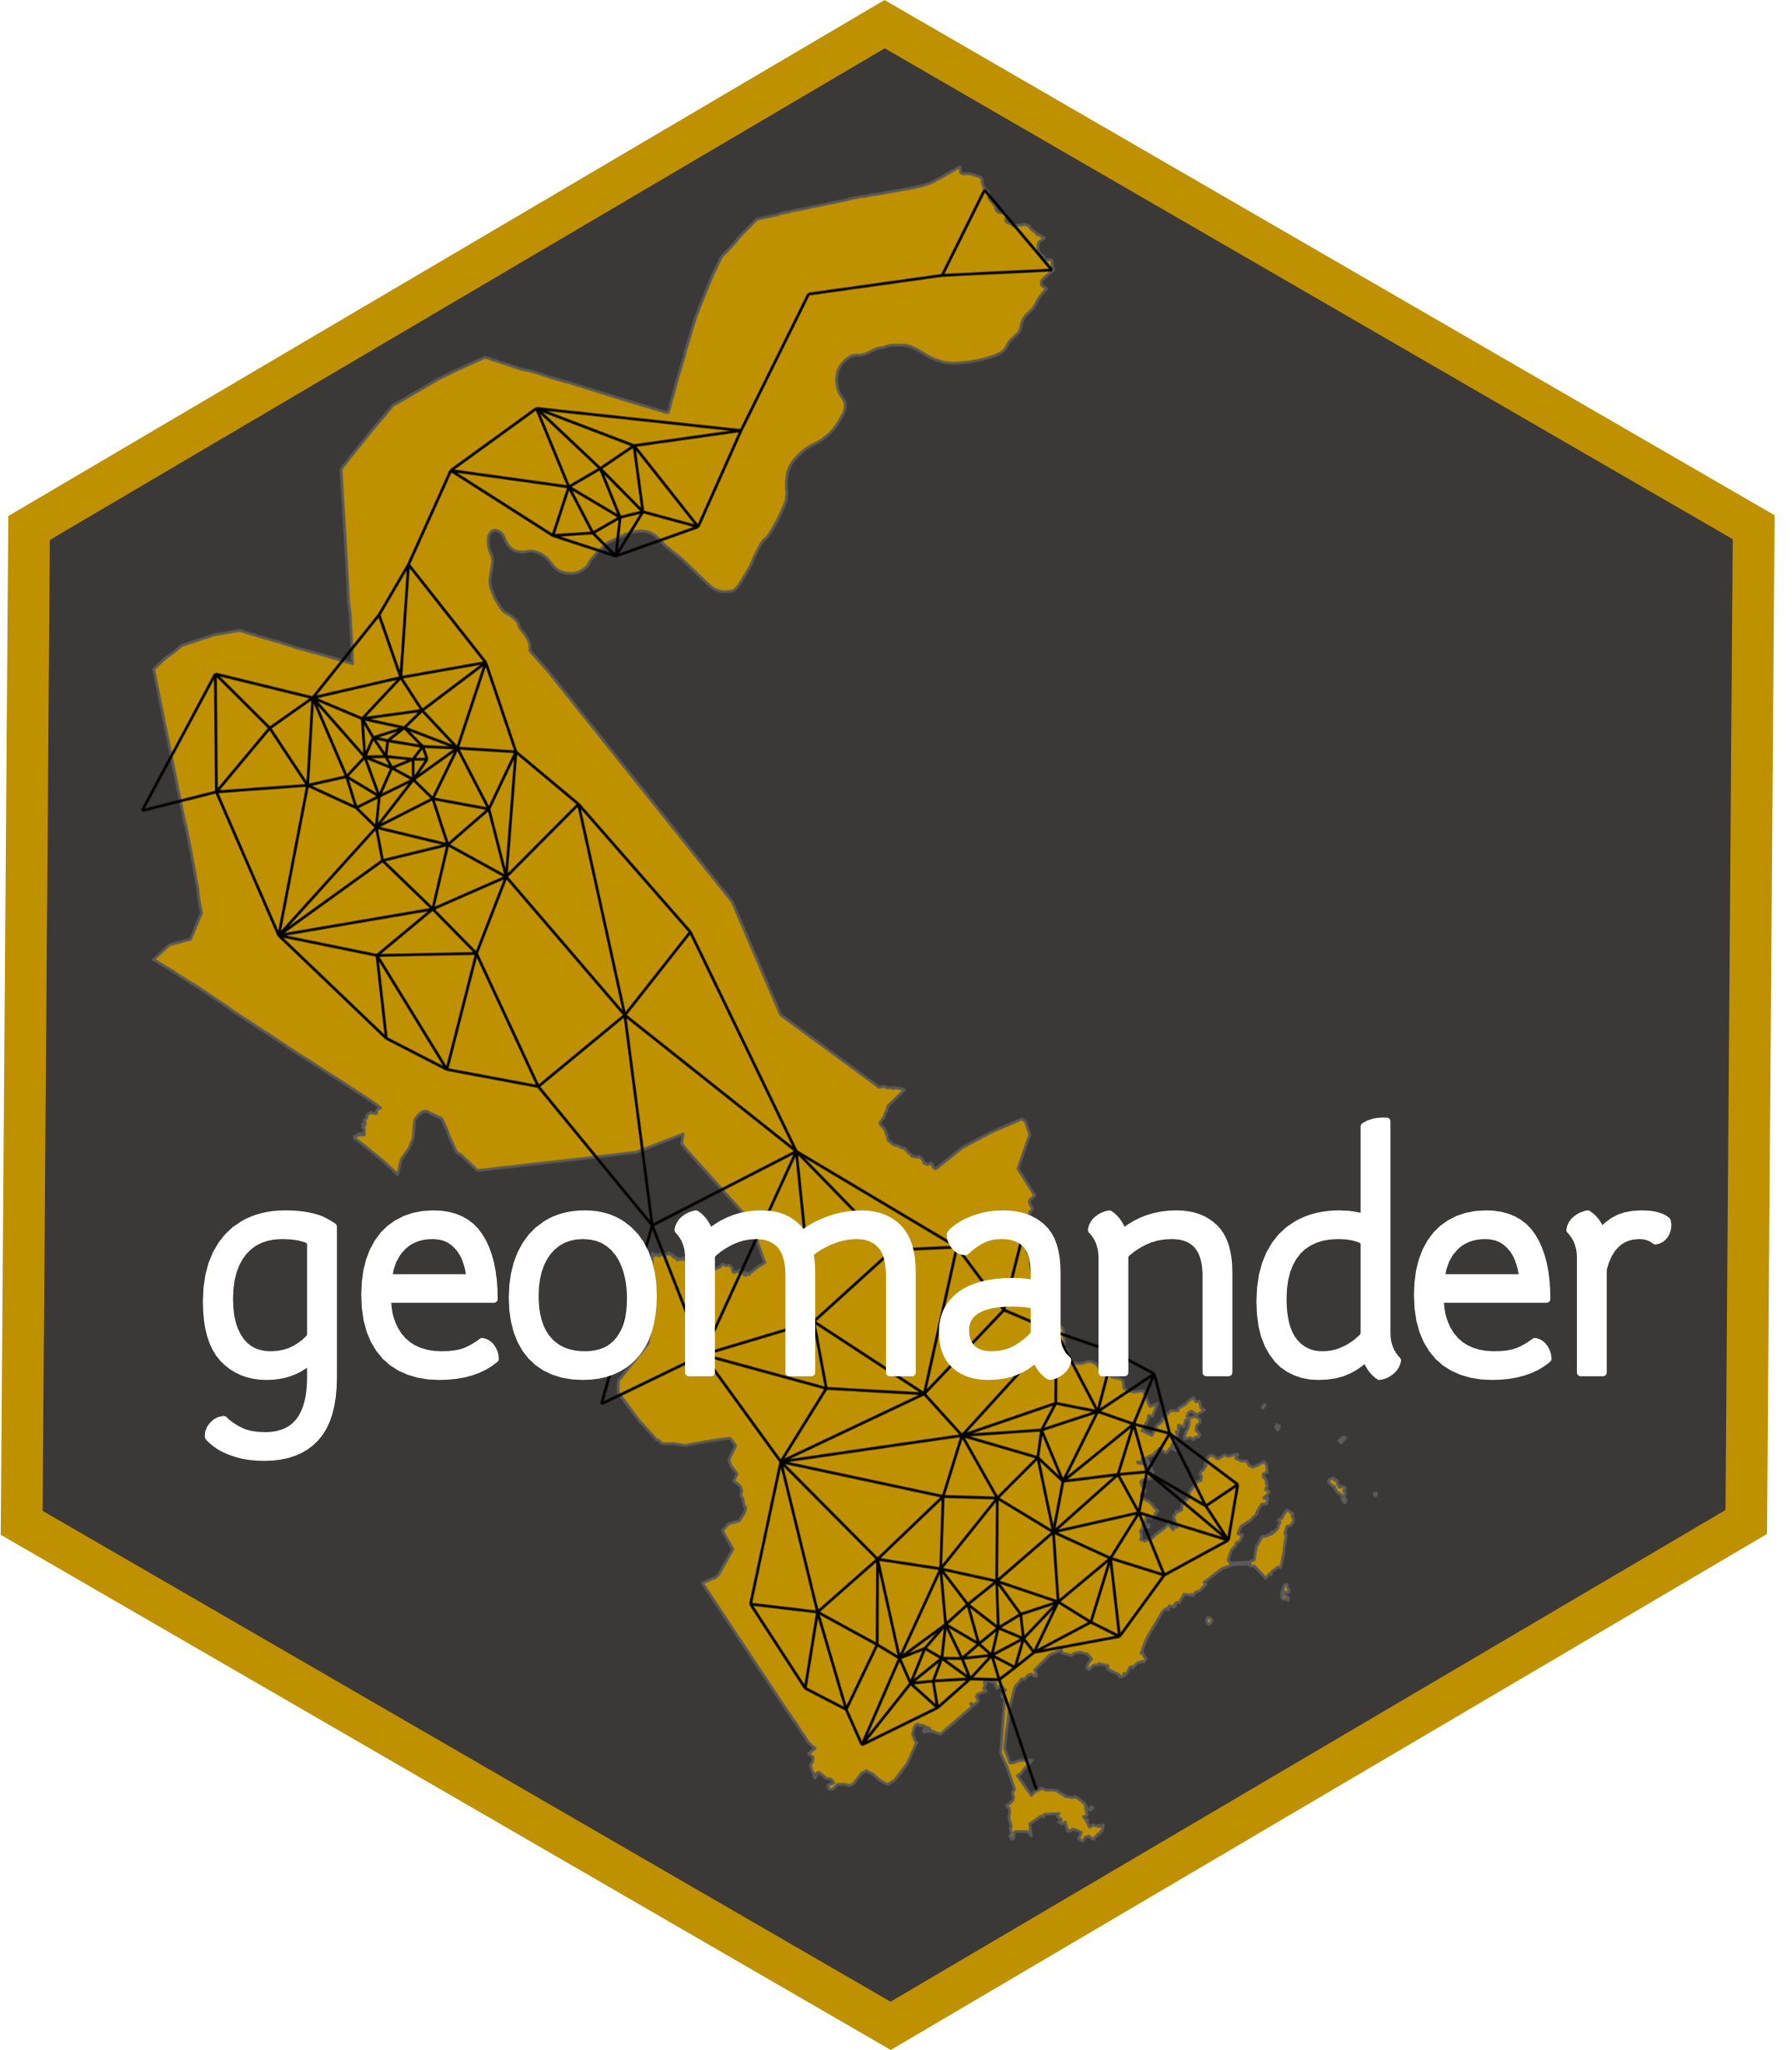 geomander hex logo